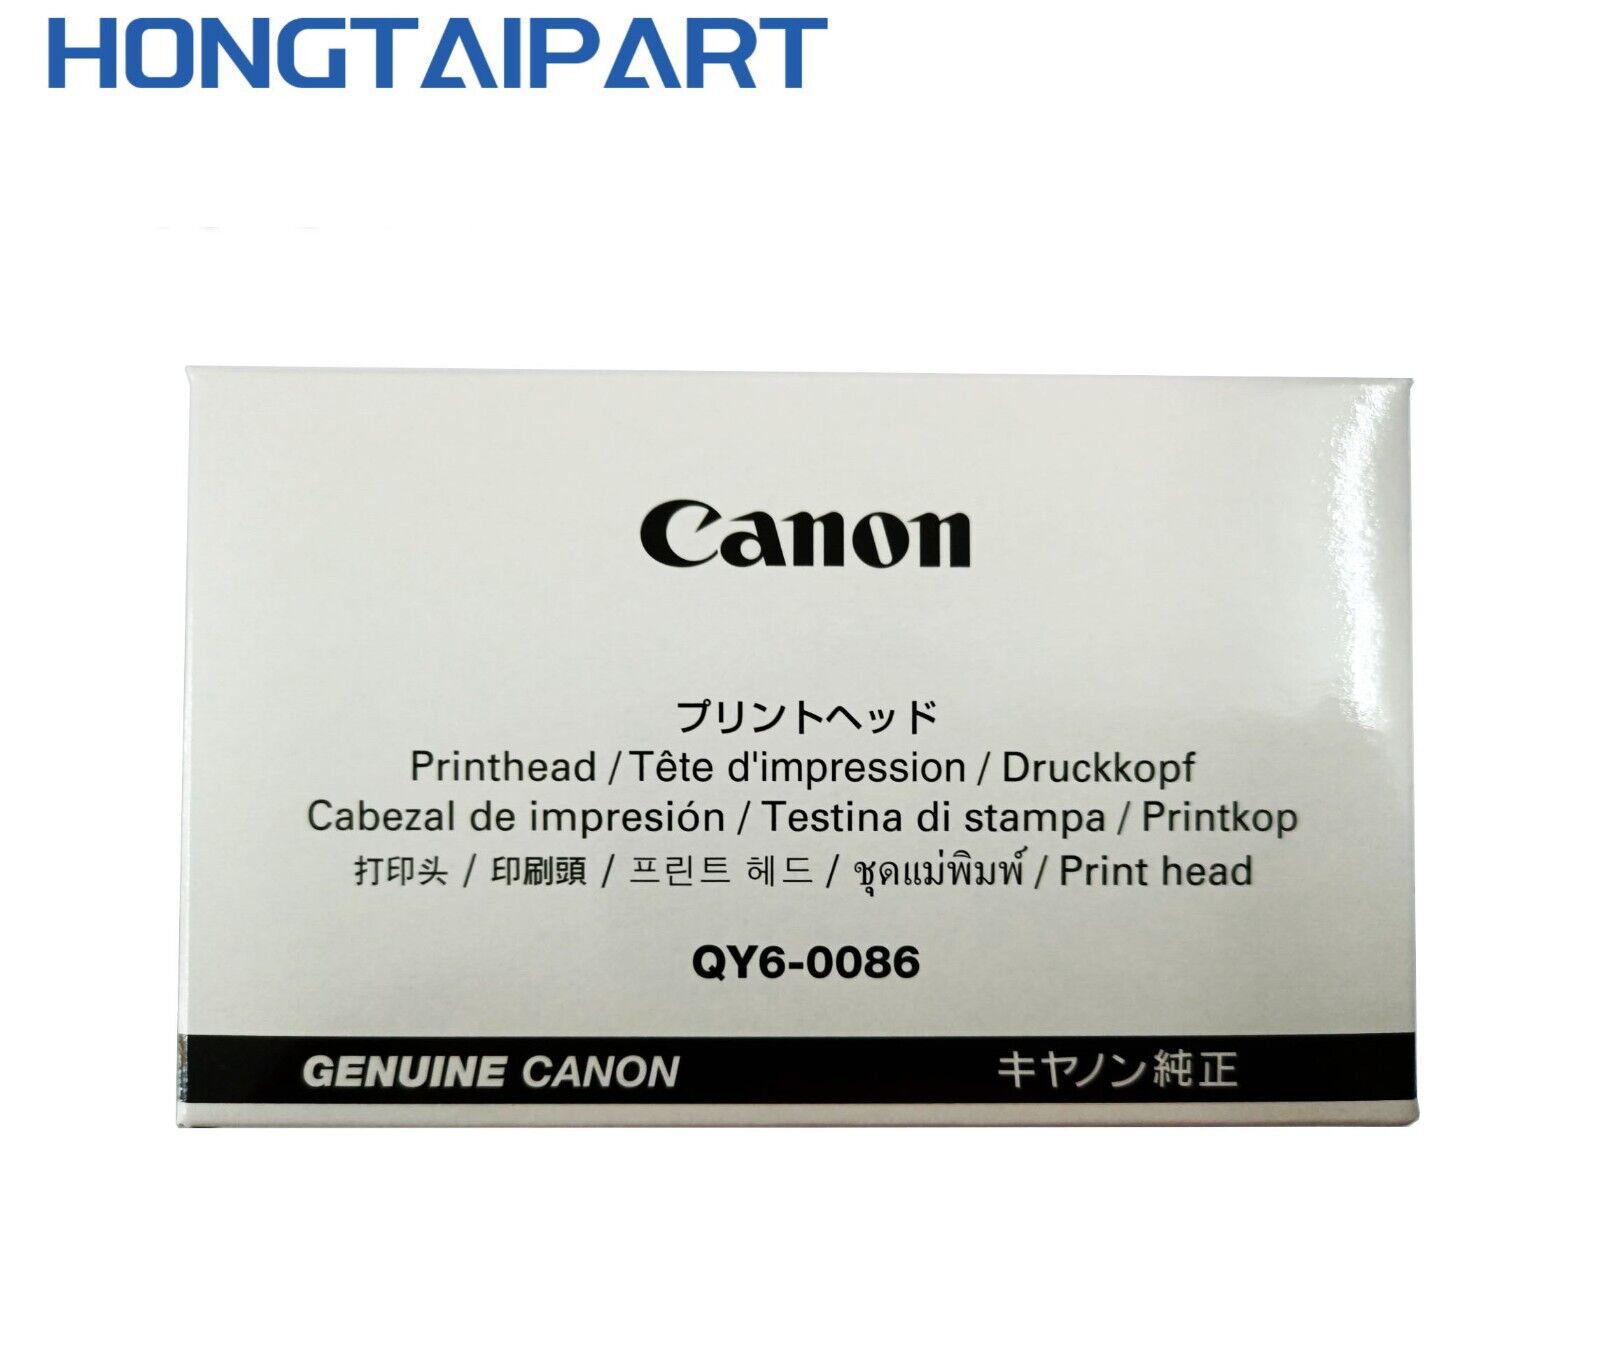 New Genuine Canon QY6-0086-010 printhead for MX922 MX722 iX6820 MX928 iX6850